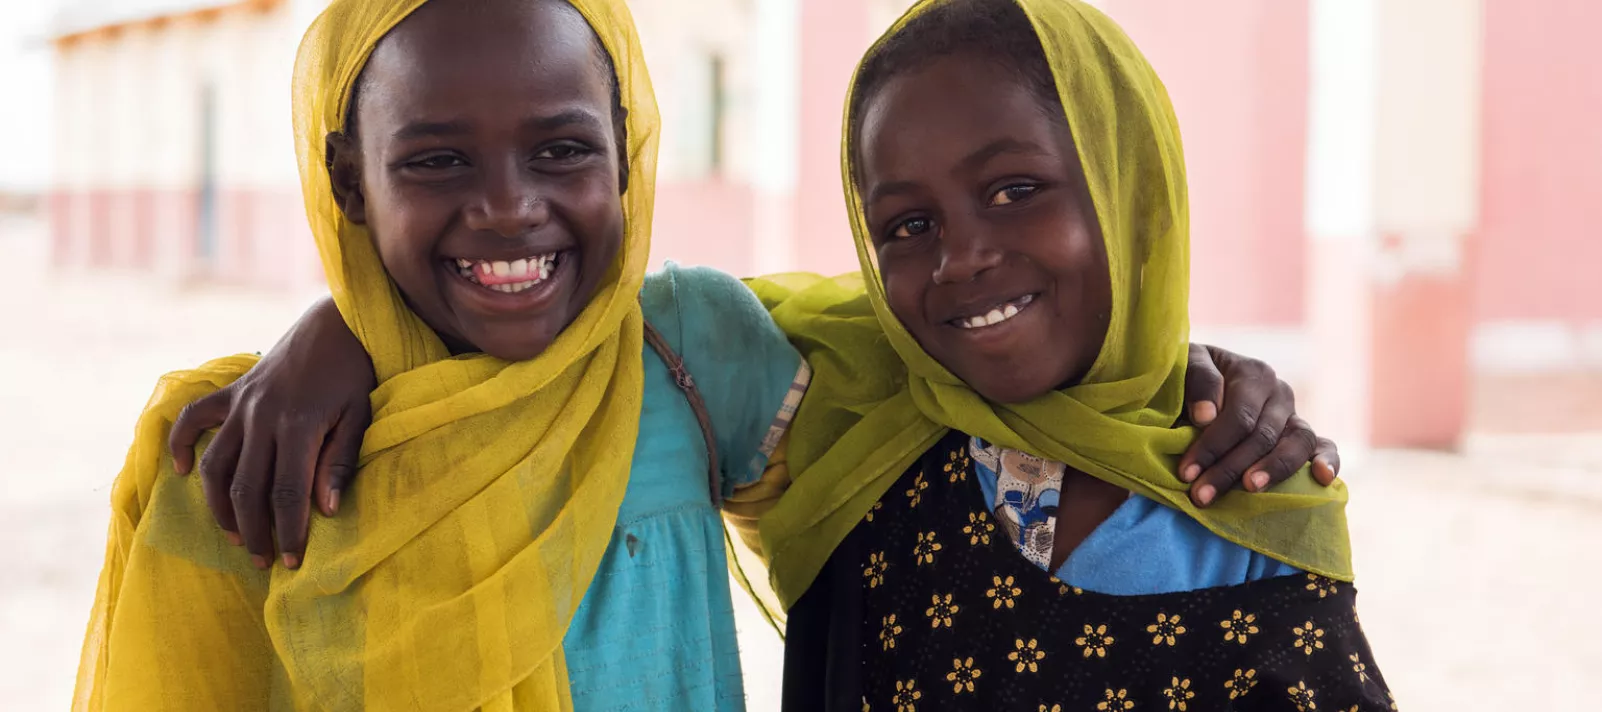 girls, smiles, children, Sudan, play